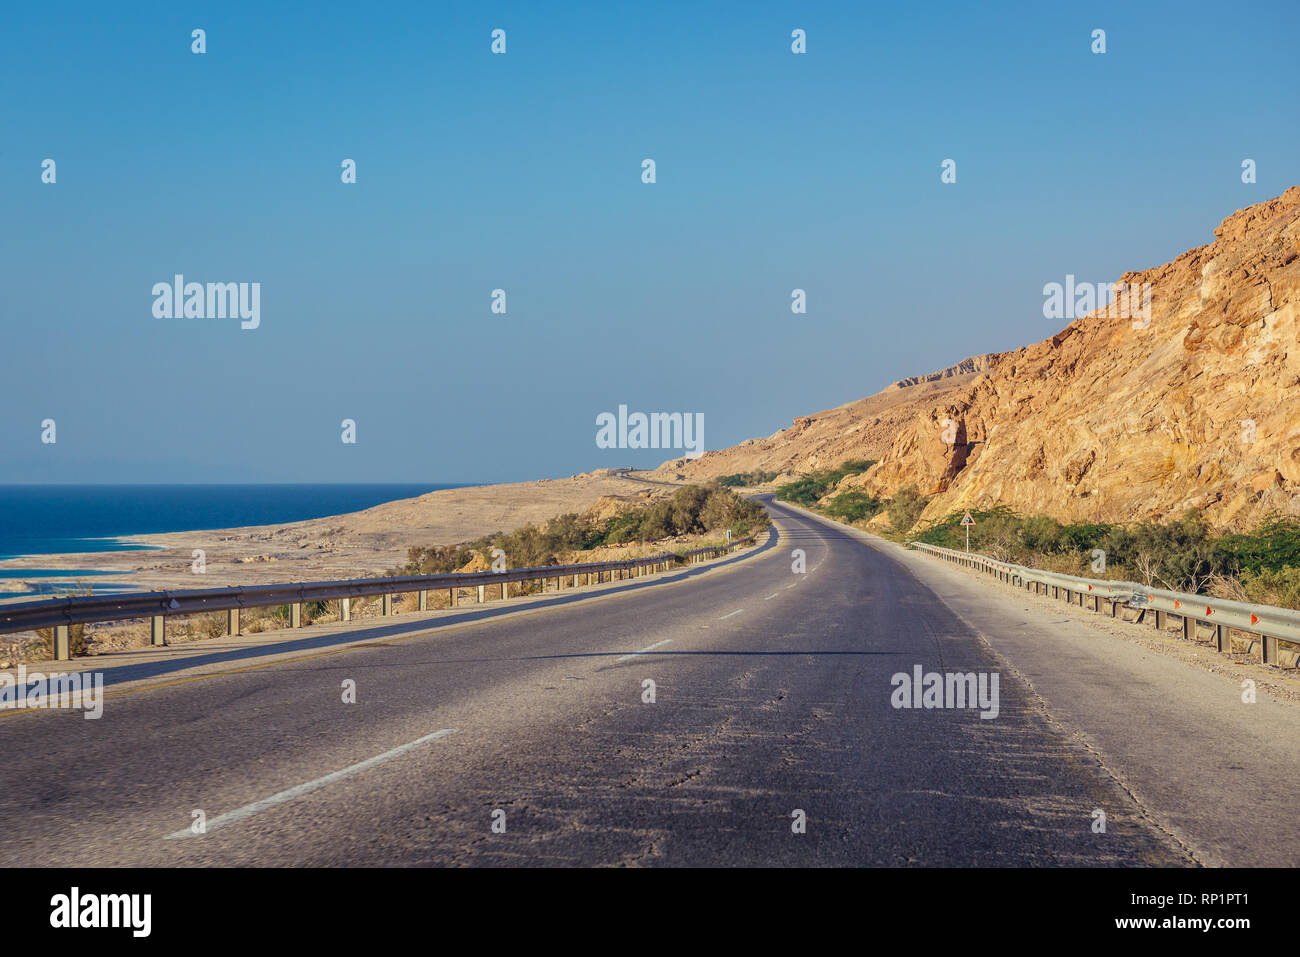 Highway 65 along Dead Sea shore in Jordan Stock Photo - Alamy